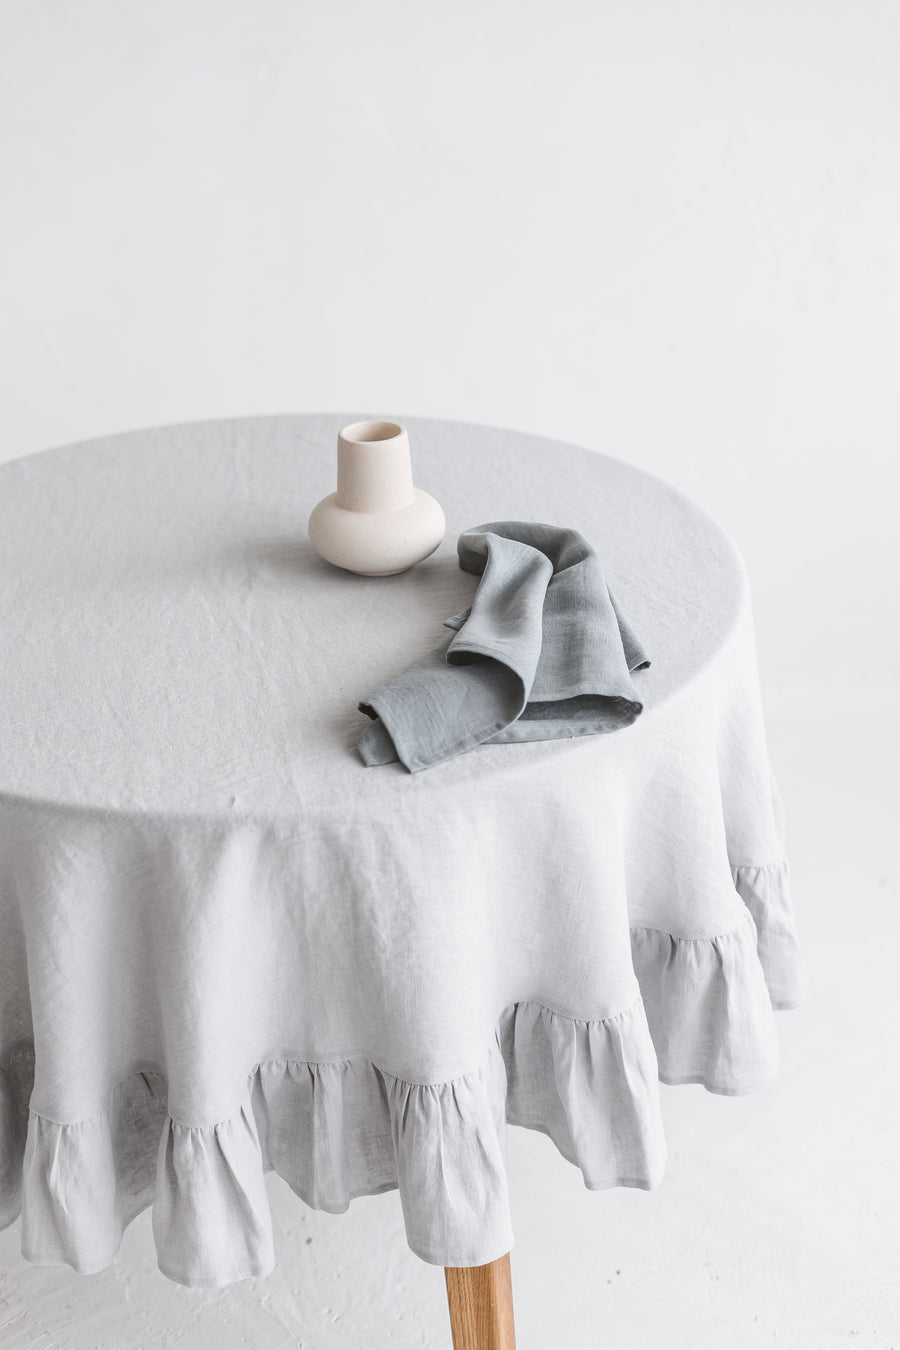 ruffled linen tablecloth